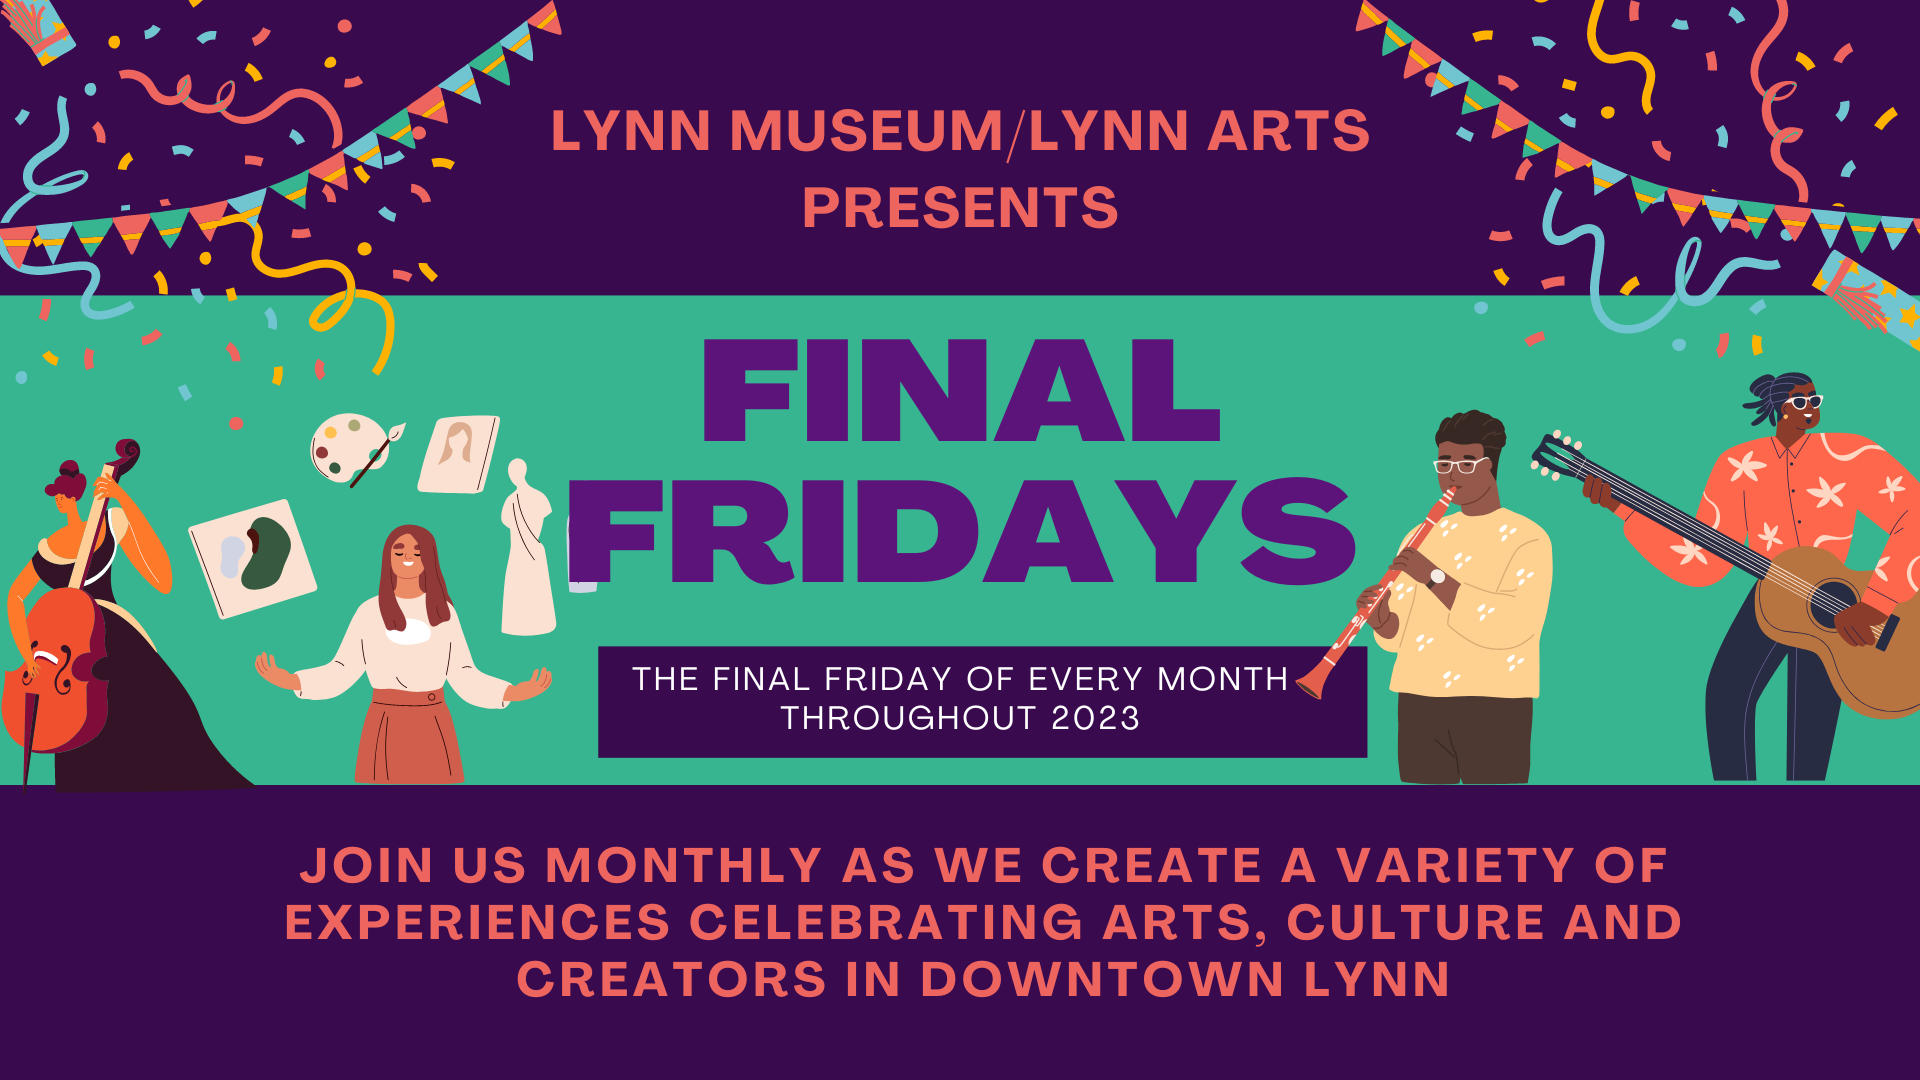 Lynn museum & arts presents final fridays.